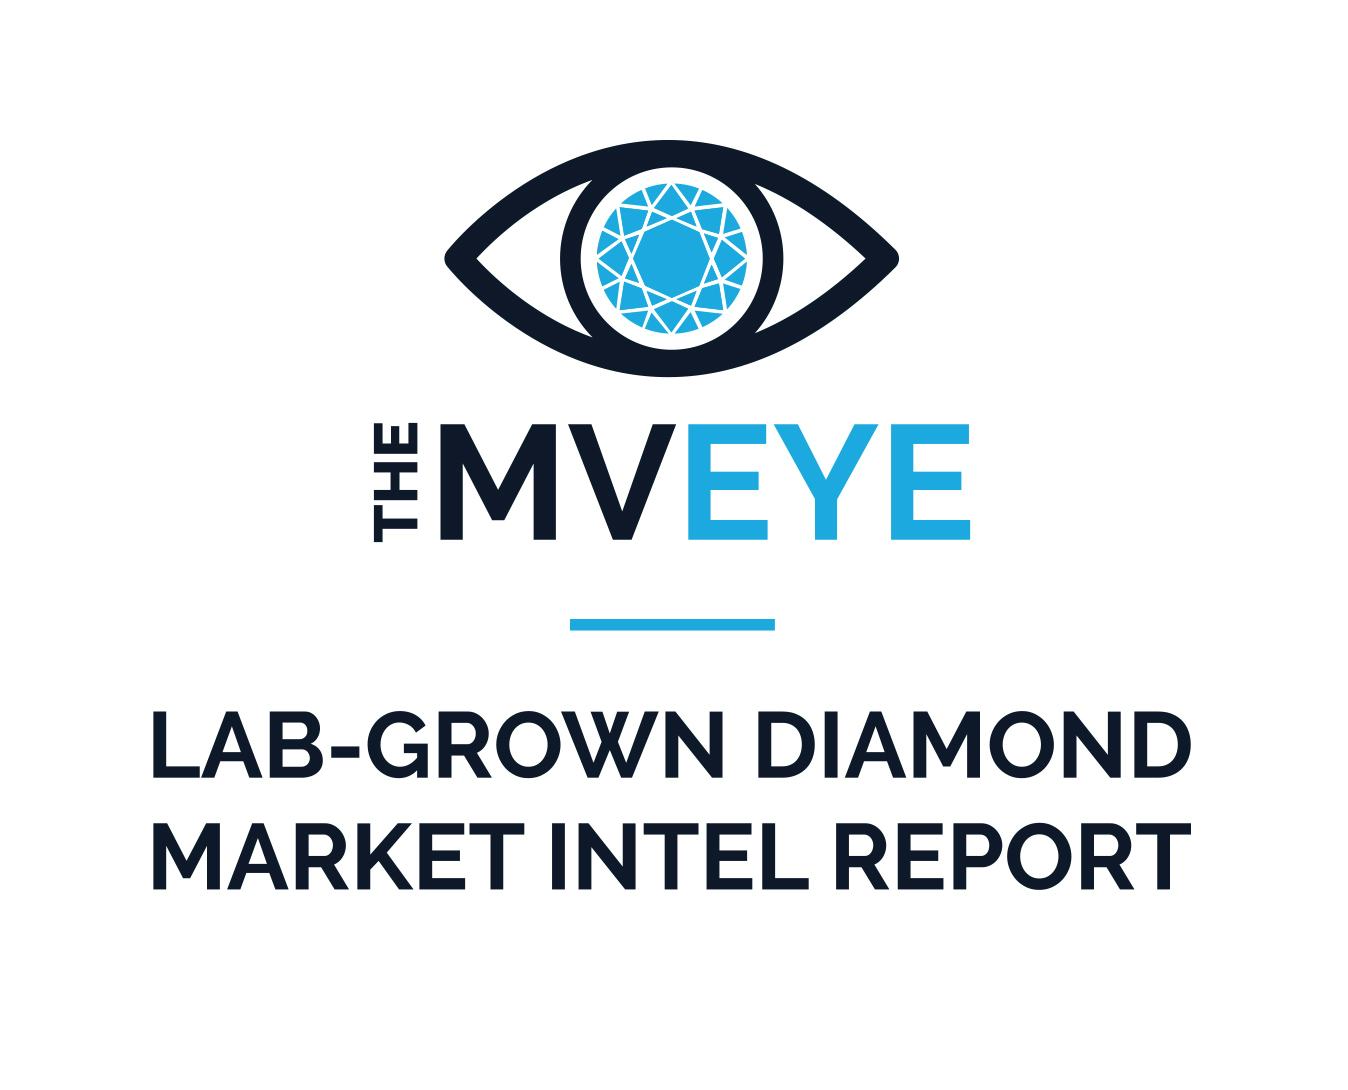 THE MVEye Lab-Grown Diamond Market Intel Report